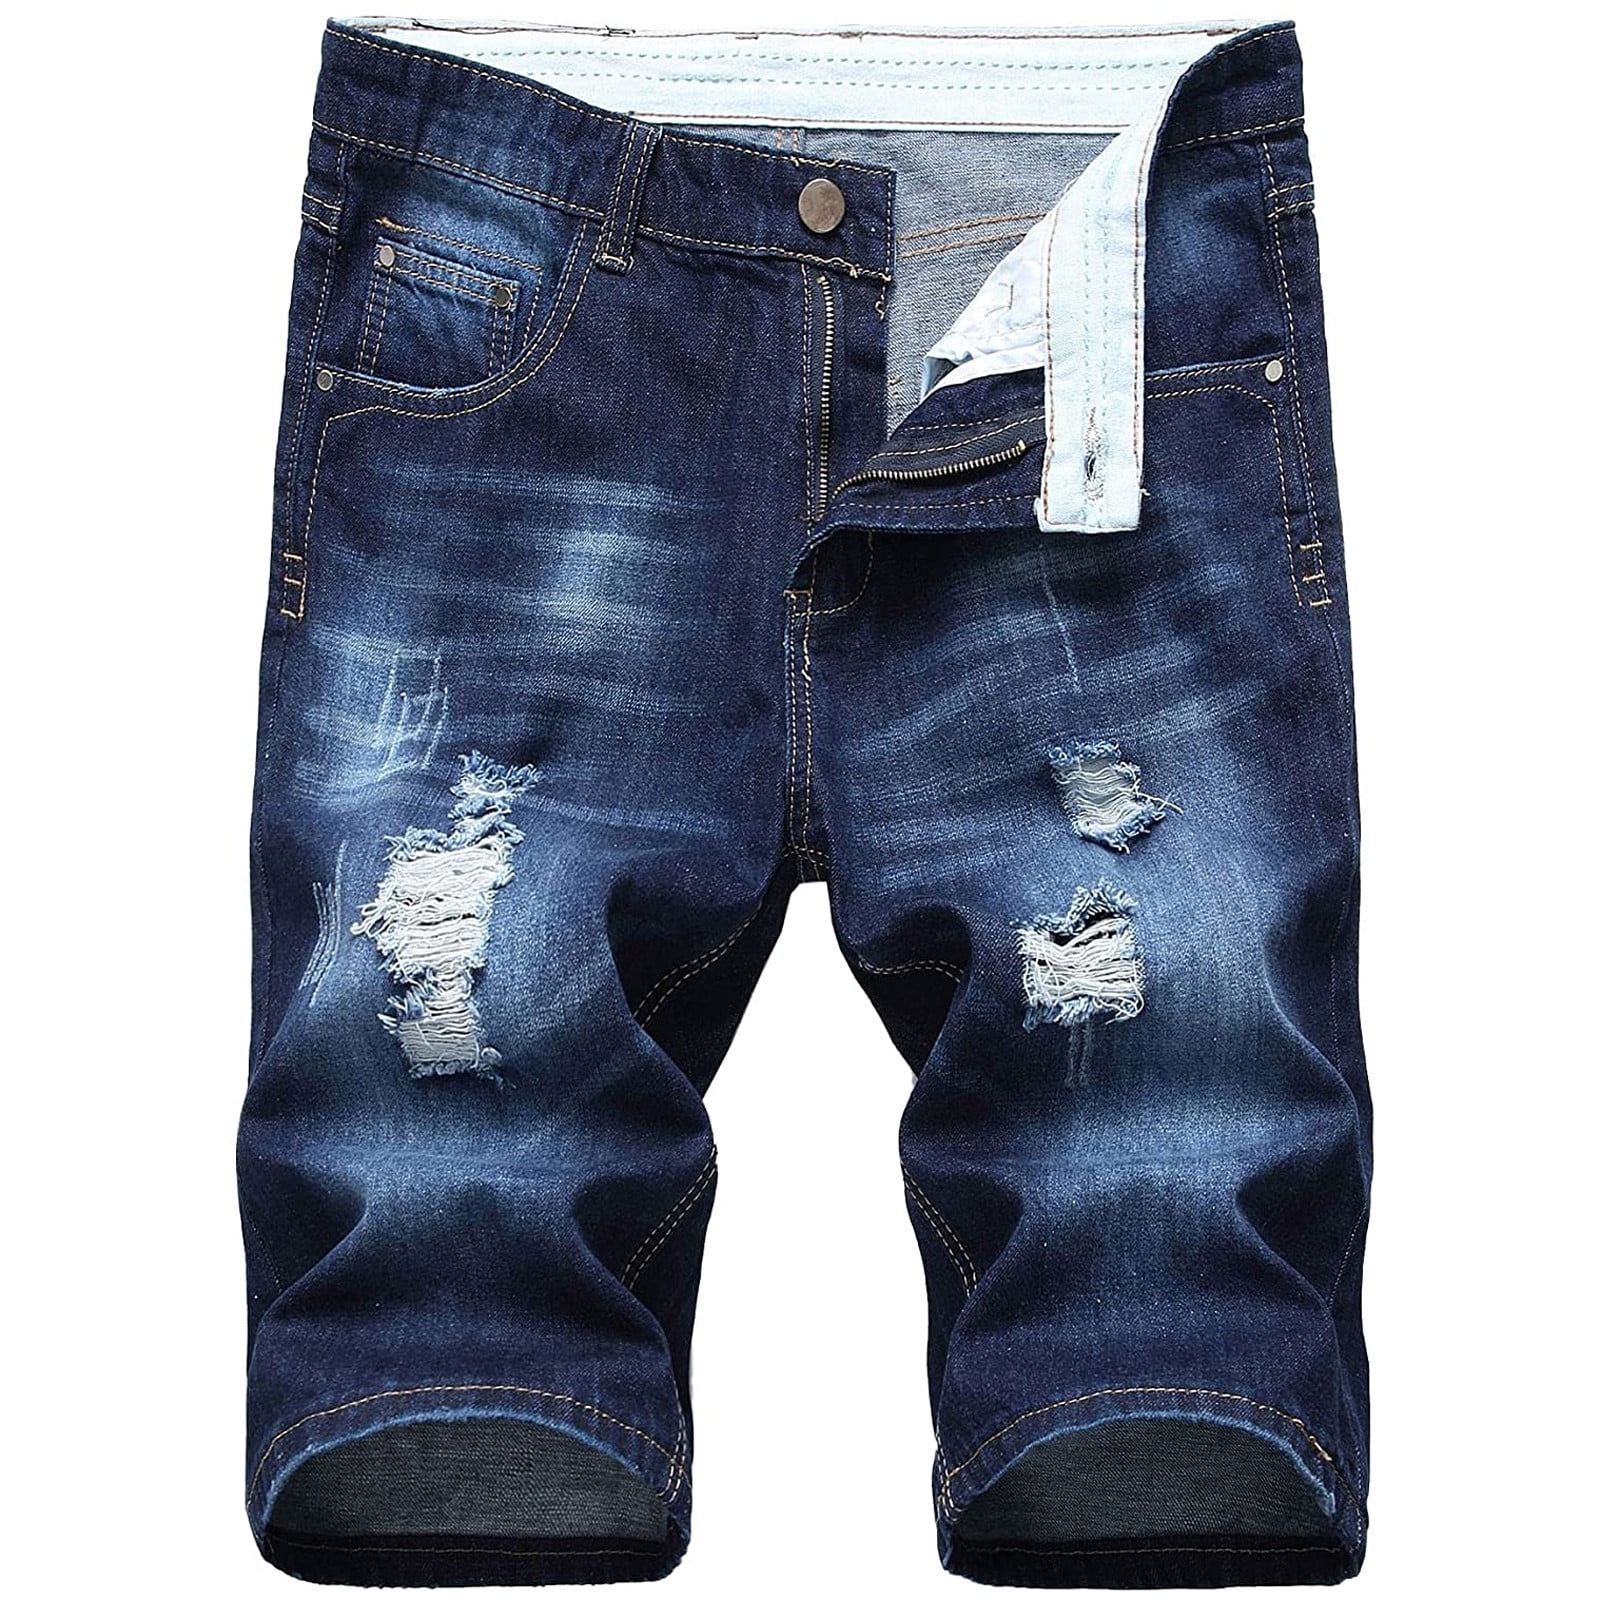 ZXHACSJ Men's Jeans Shorts Ripped Jeans Short Trousers Summer Leisure ...